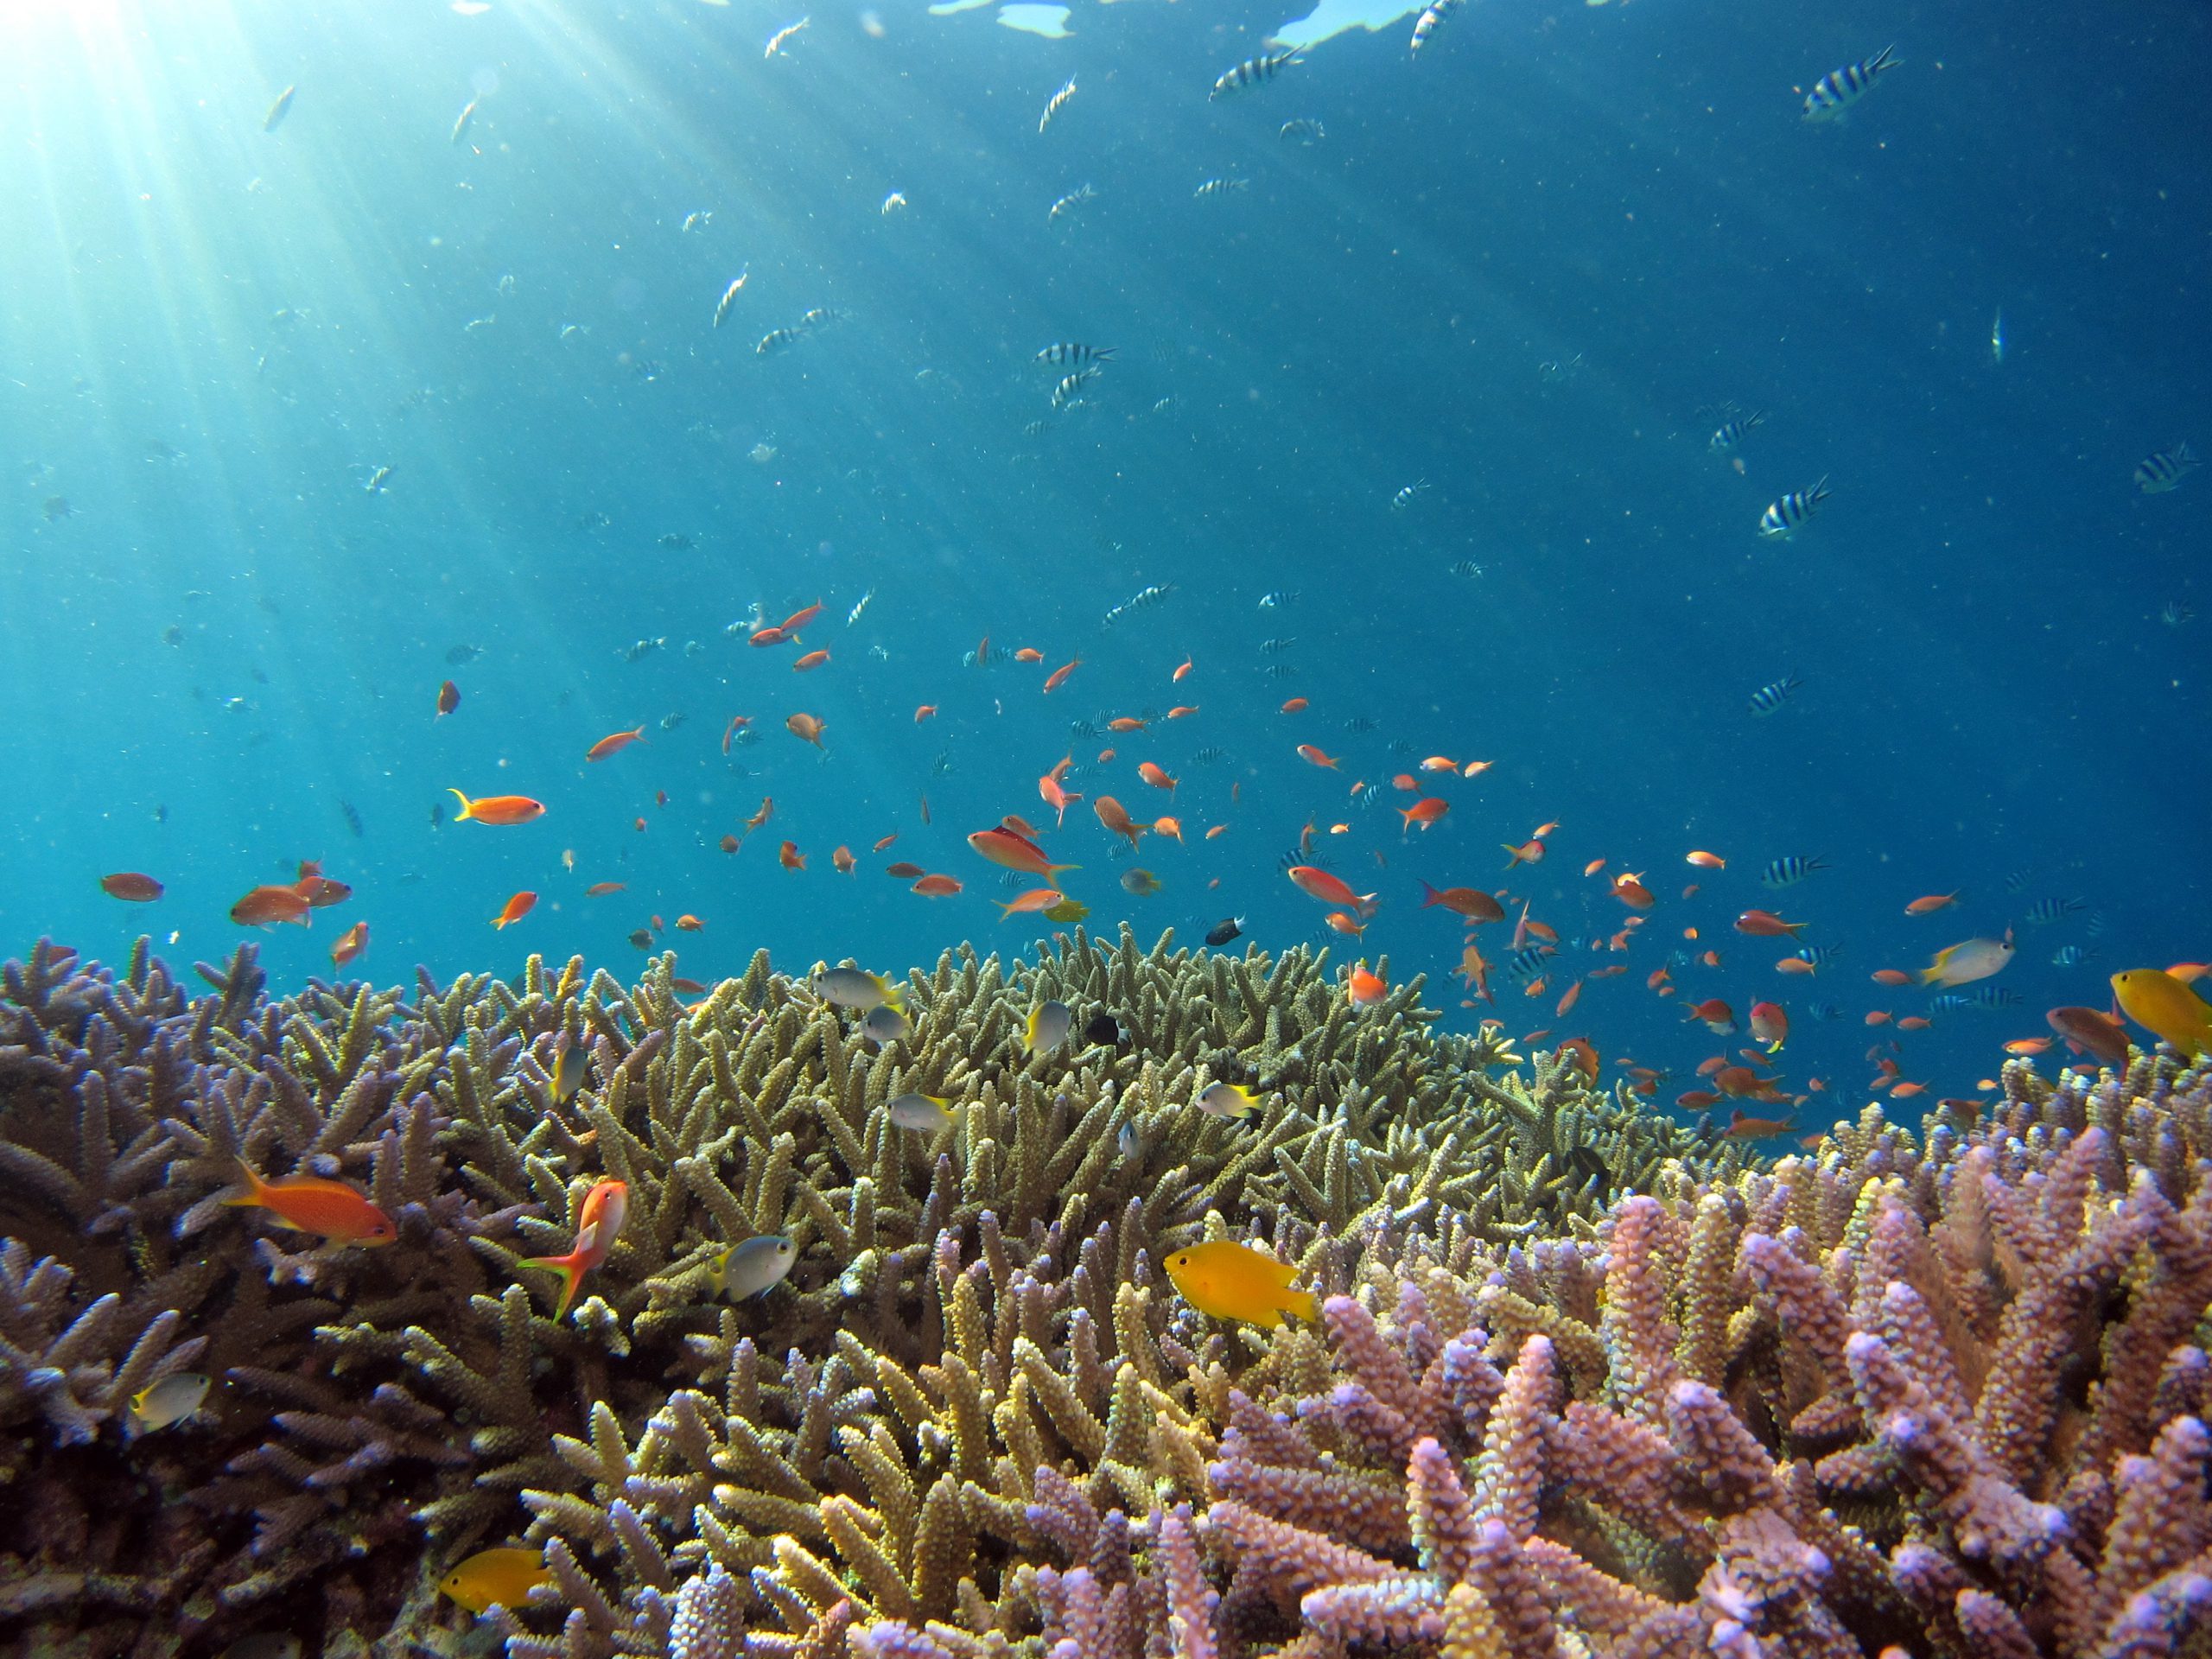 Coral is a keystone specie of coastal habitats